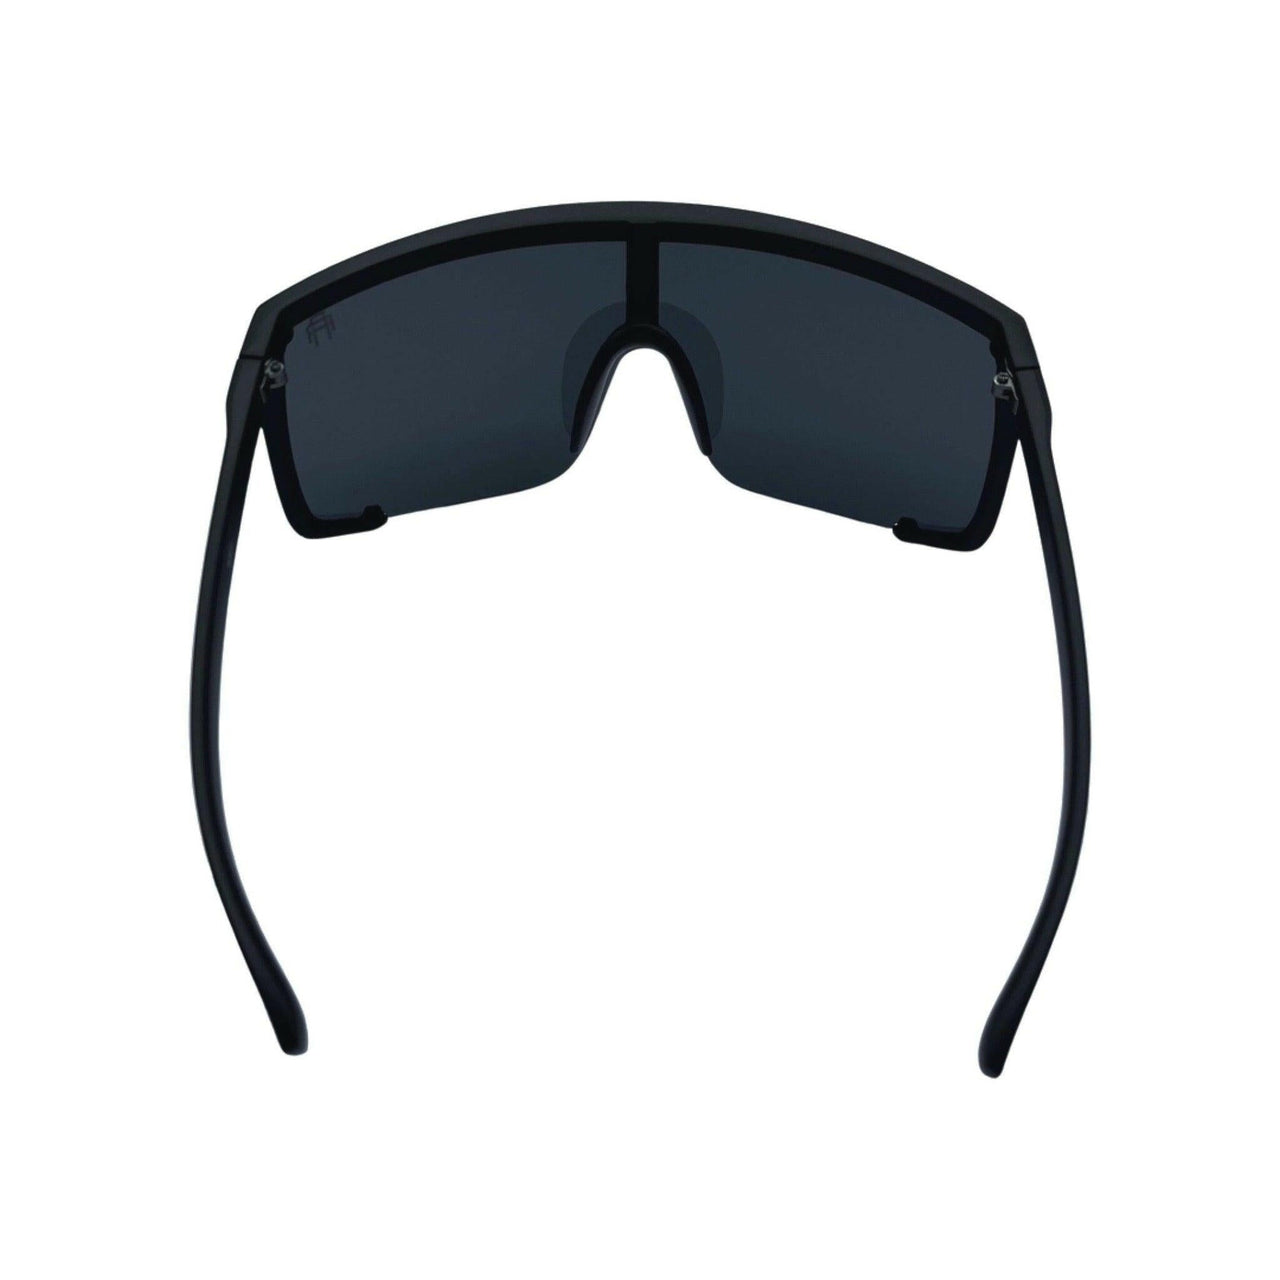 Steezy Gloss Black Sunglasses - Rebel Reaper Clothing Company Sunglasses